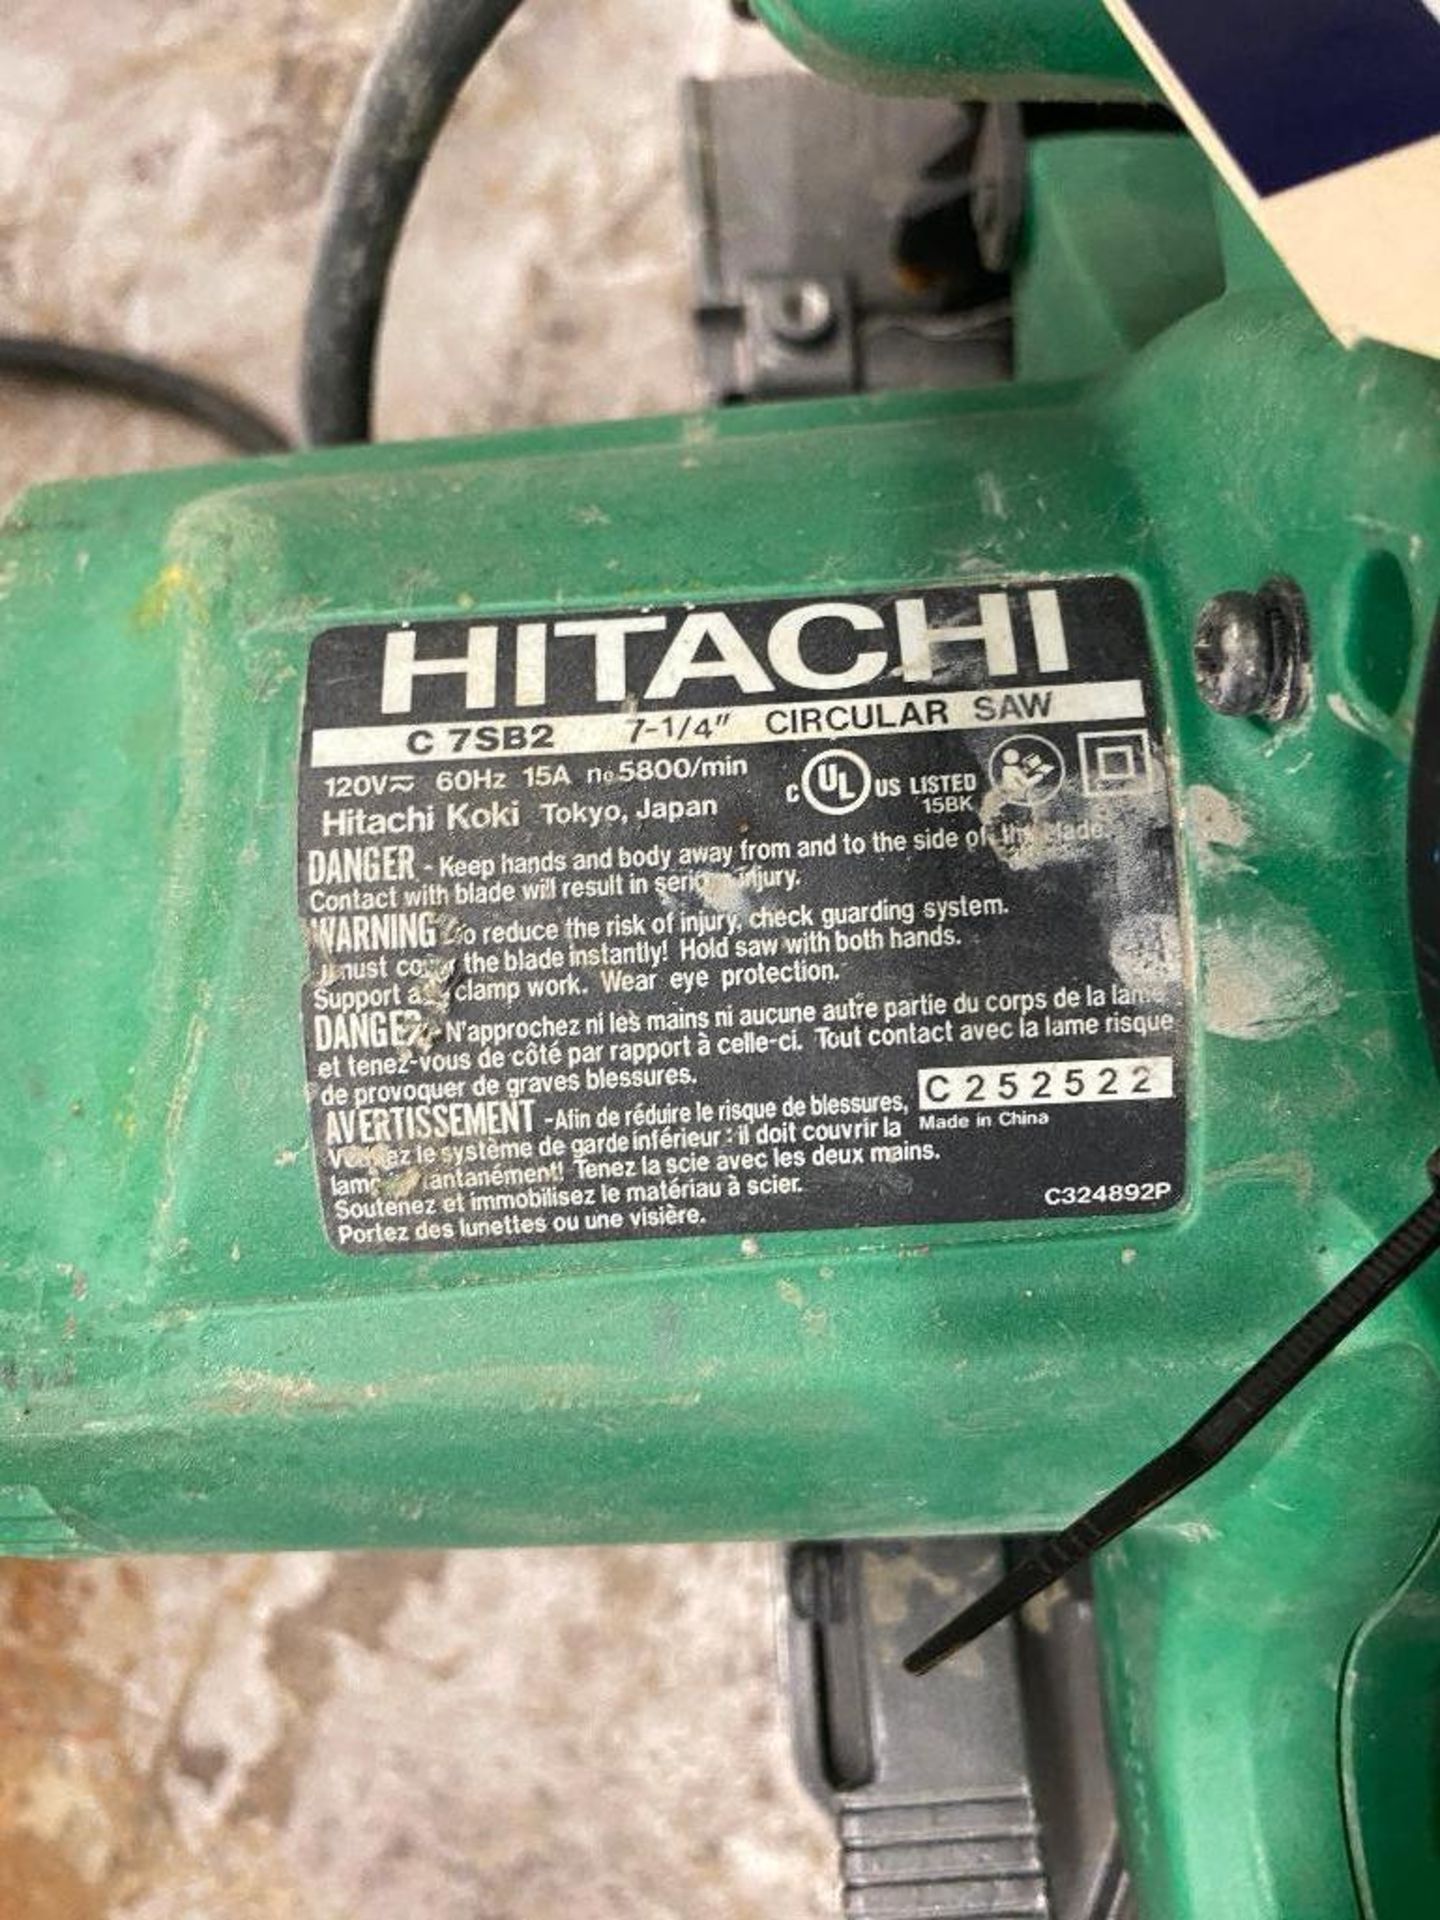 Hitachi C7SB2 7 1/4" Circular Saw. - Image 3 of 3